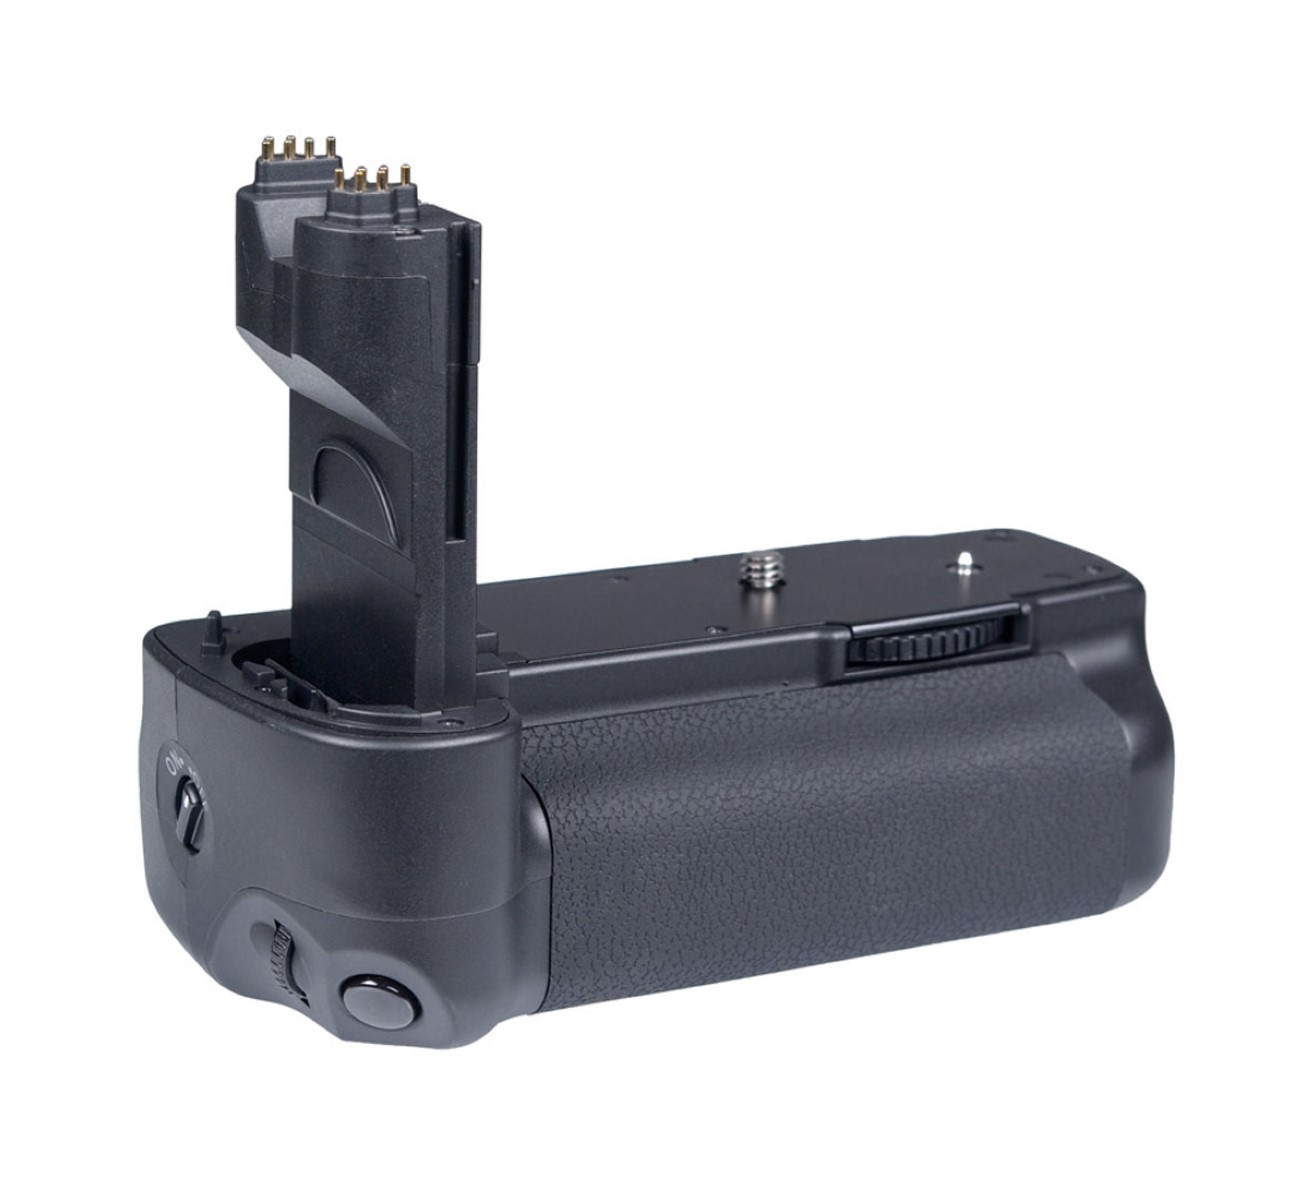 ayex Batteriegriff Set für Canon EOS 5D Mark II + LP-E6 Akku wie BG-E6 